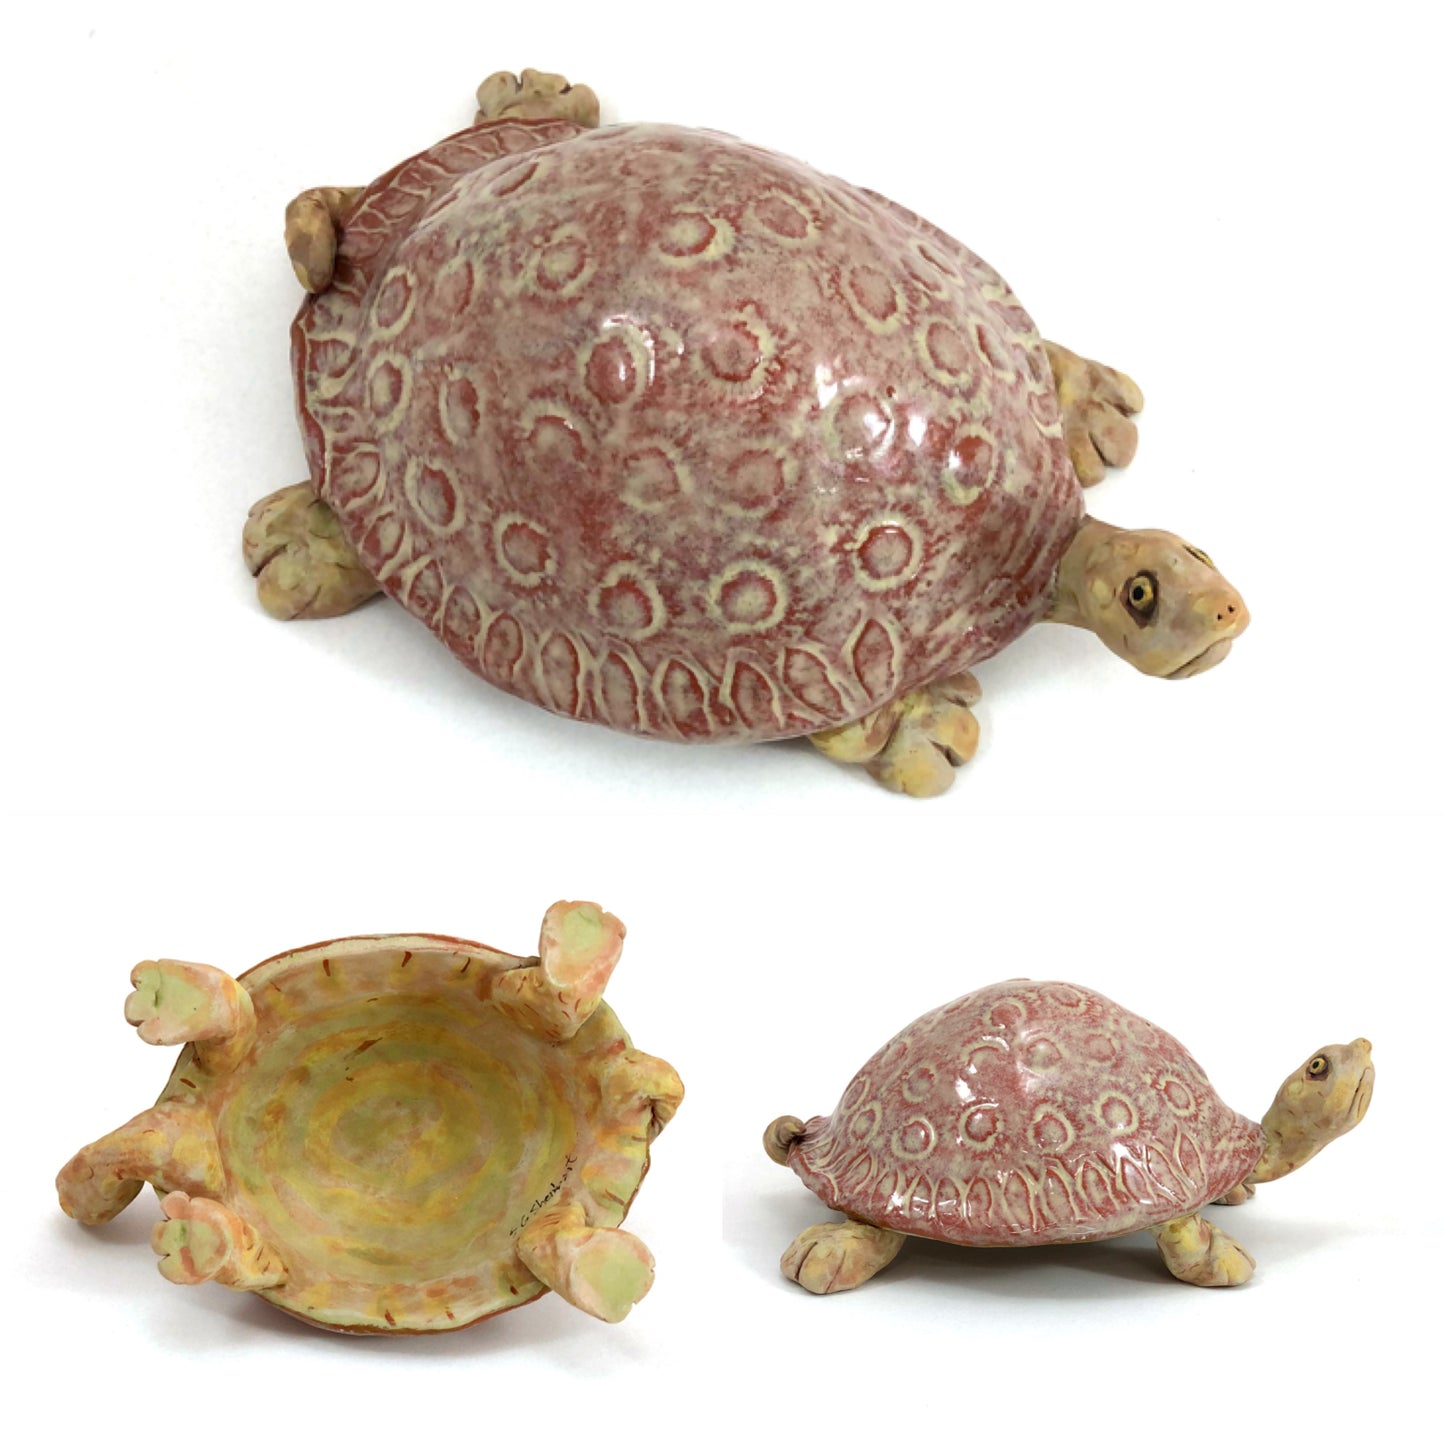 Turtle & Tortoise Sculptures